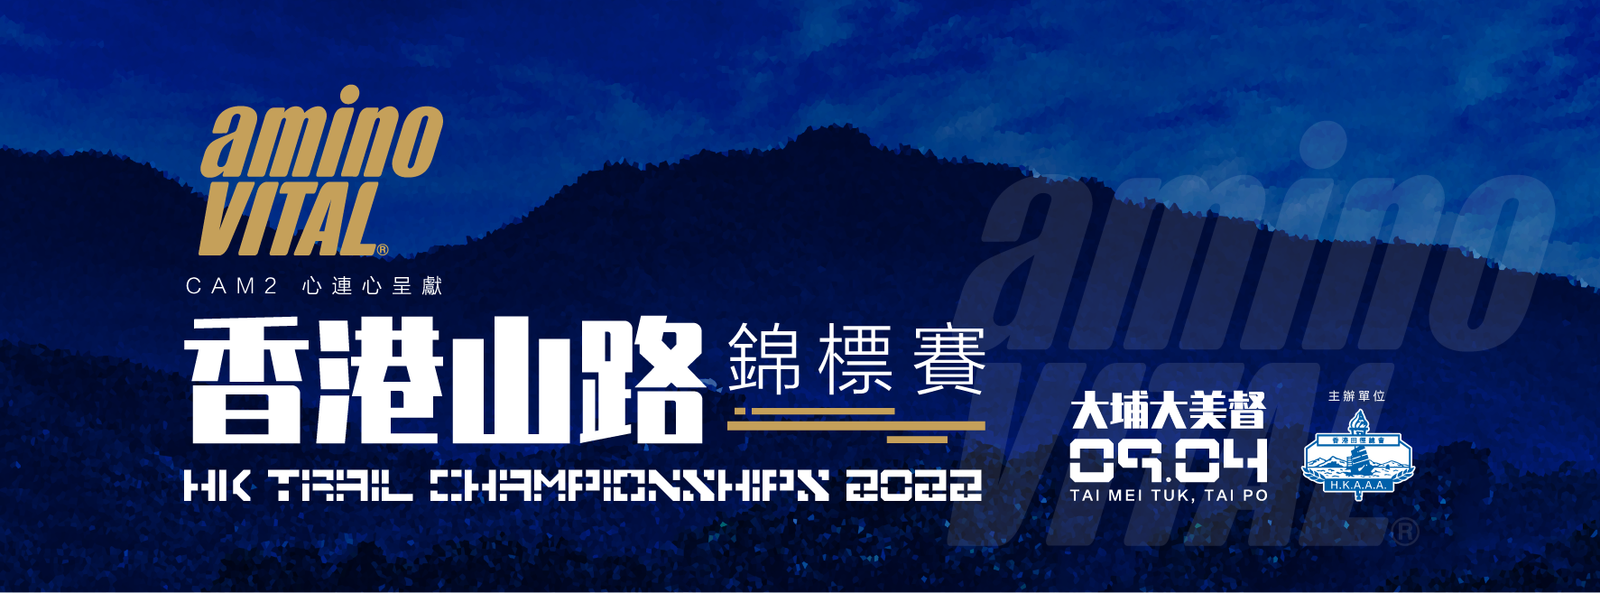 aminoVital Cam2 心連心呈獻 香港山路錦標賽2022 (一) 長距離路線首度曝光